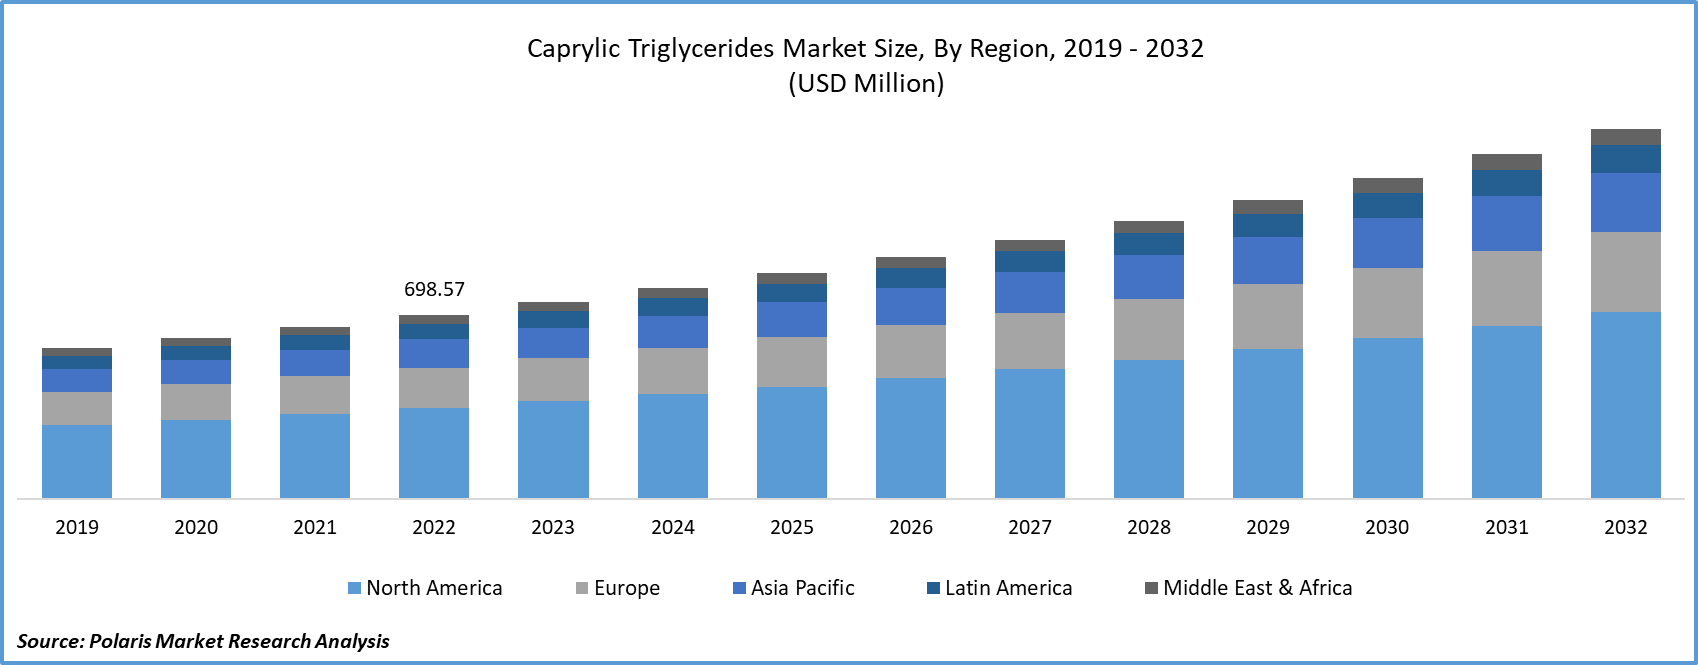 Caprylic Triglycerides Market Size